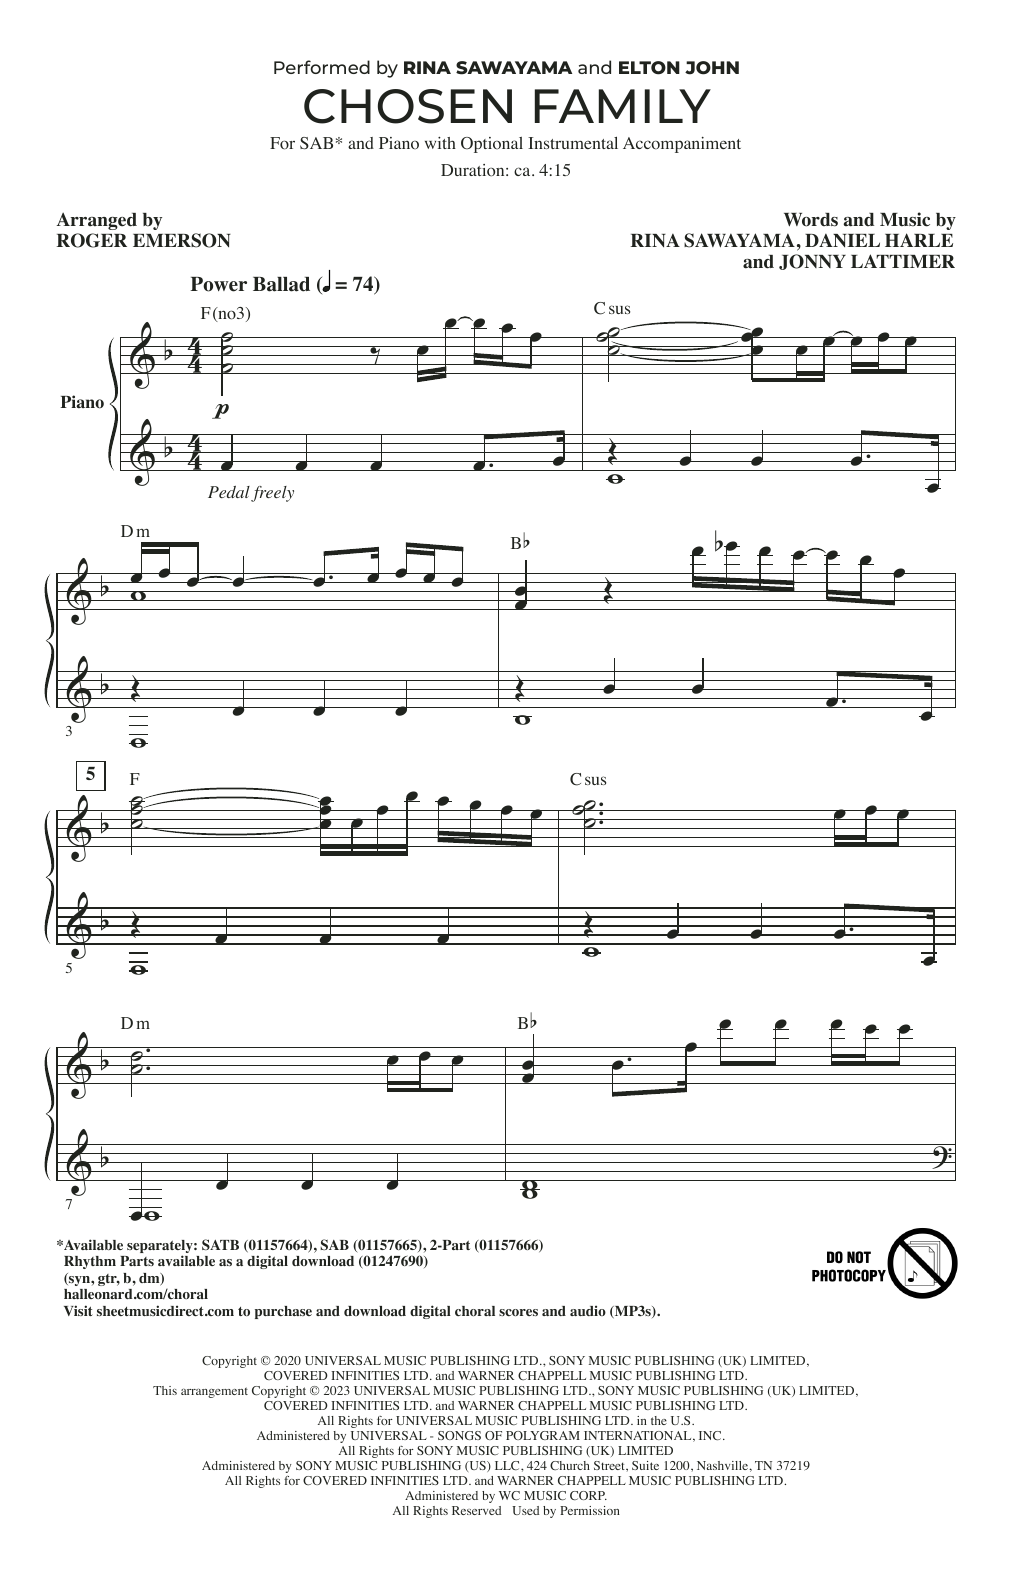 Rina Sawayama and Elton John Chosen Family (arr. Roger Emerson) Sheet Music Notes & Chords for SAB Choir - Download or Print PDF